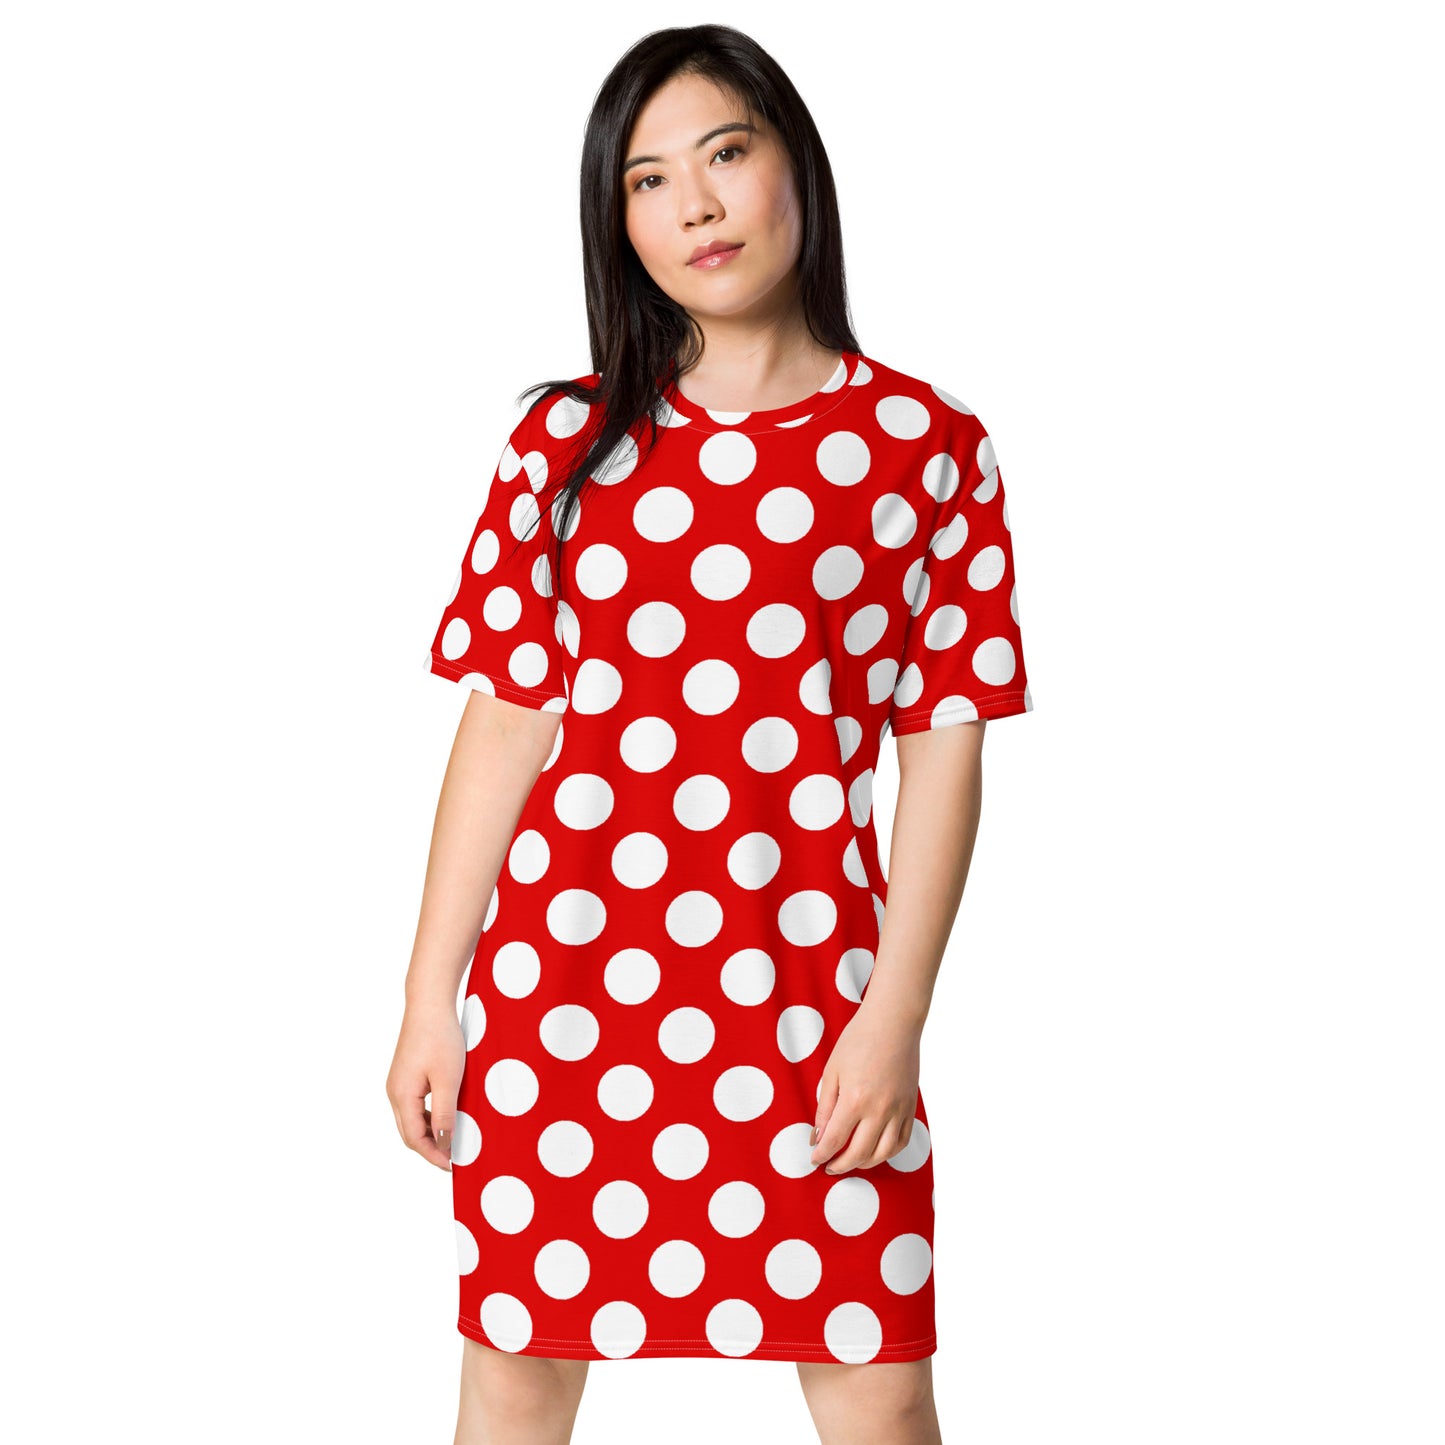 "Red and White Polka Dot" T-shirt dress